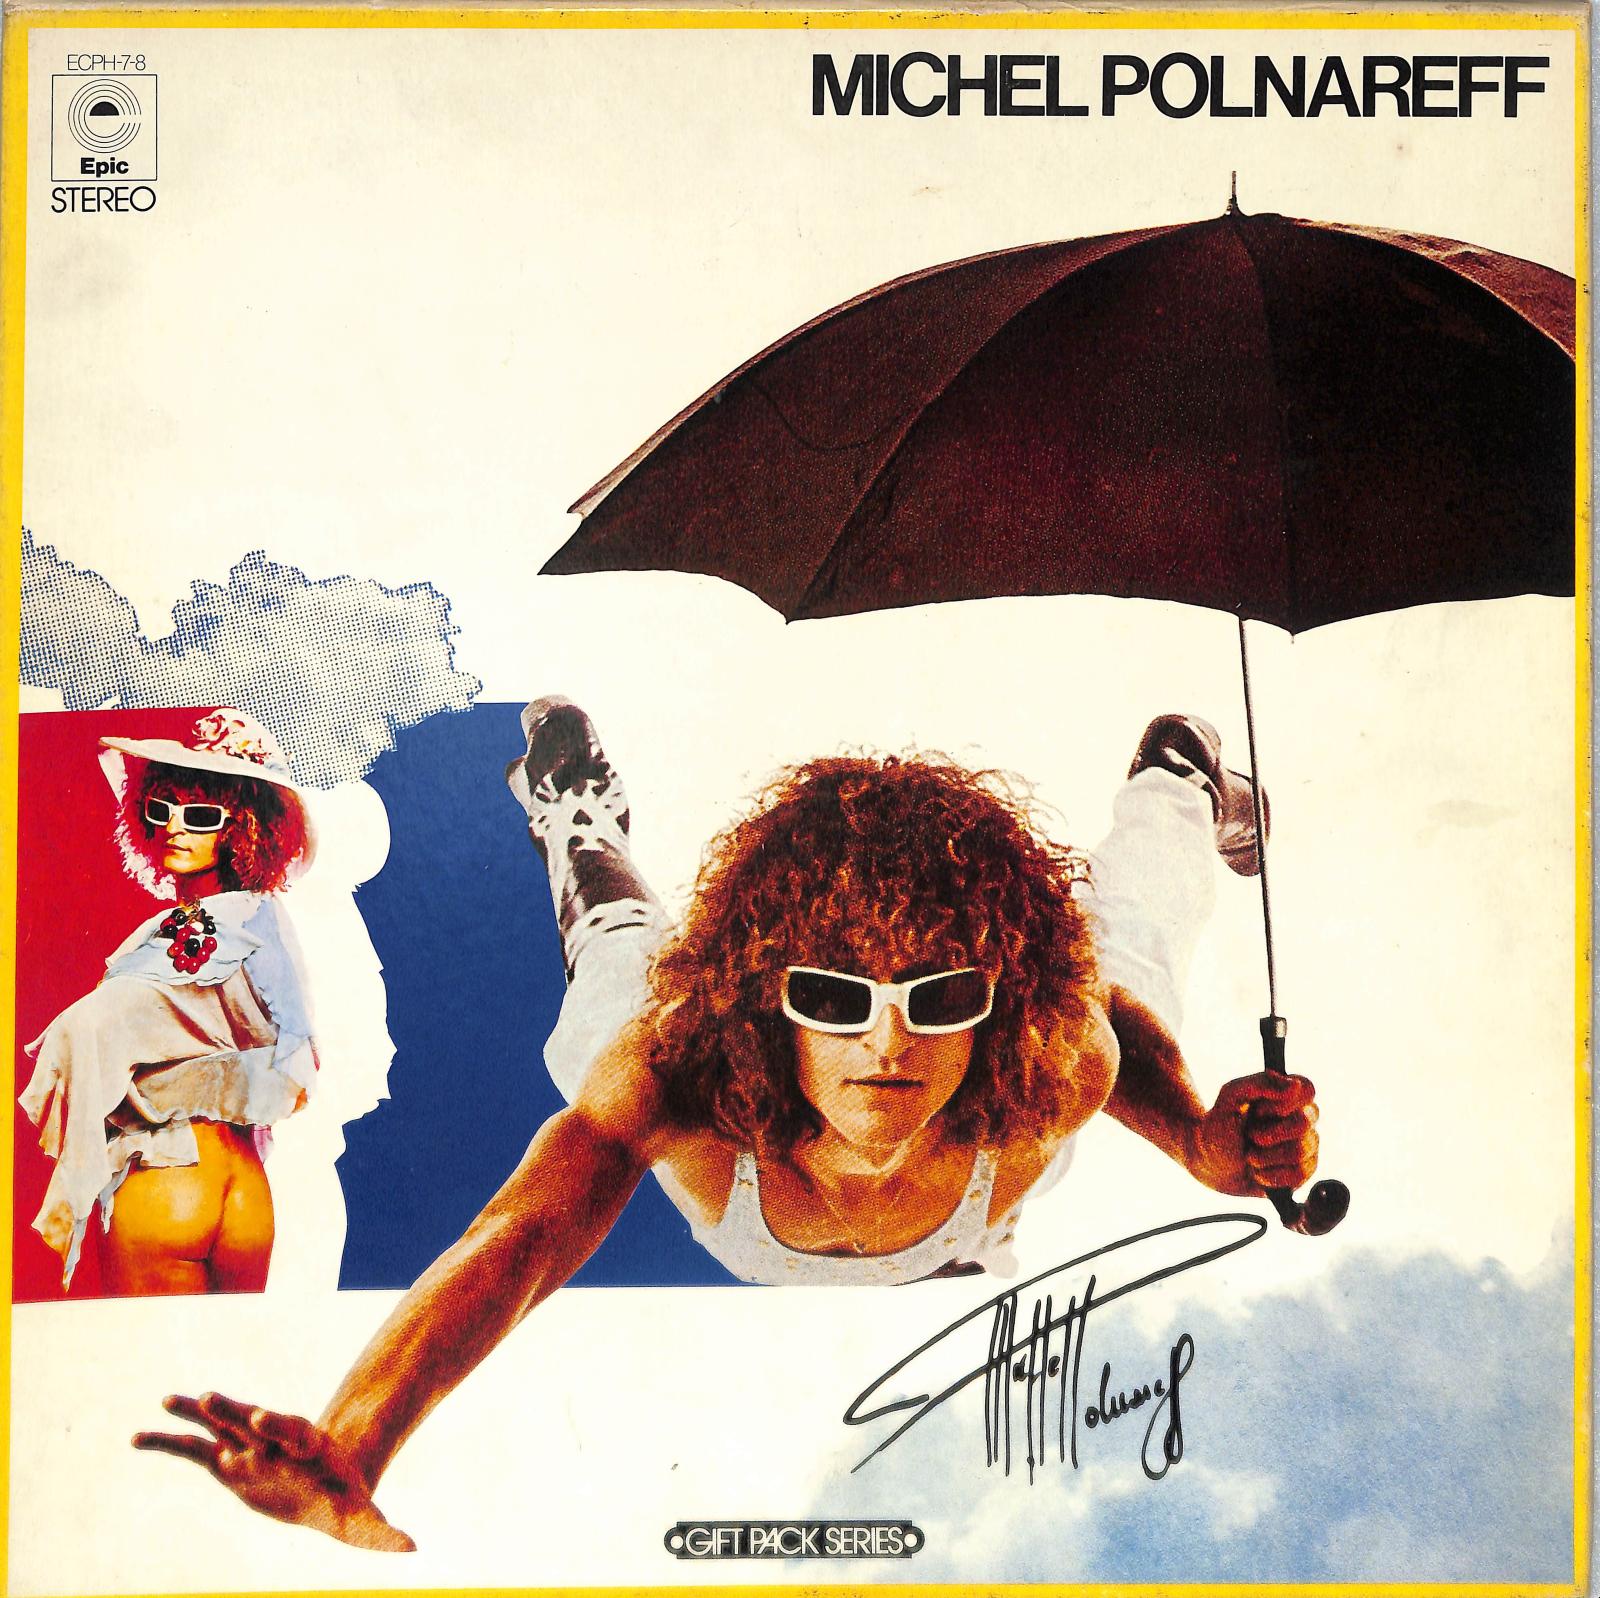 MICHEL POLNAREFF – Gift Pack Series